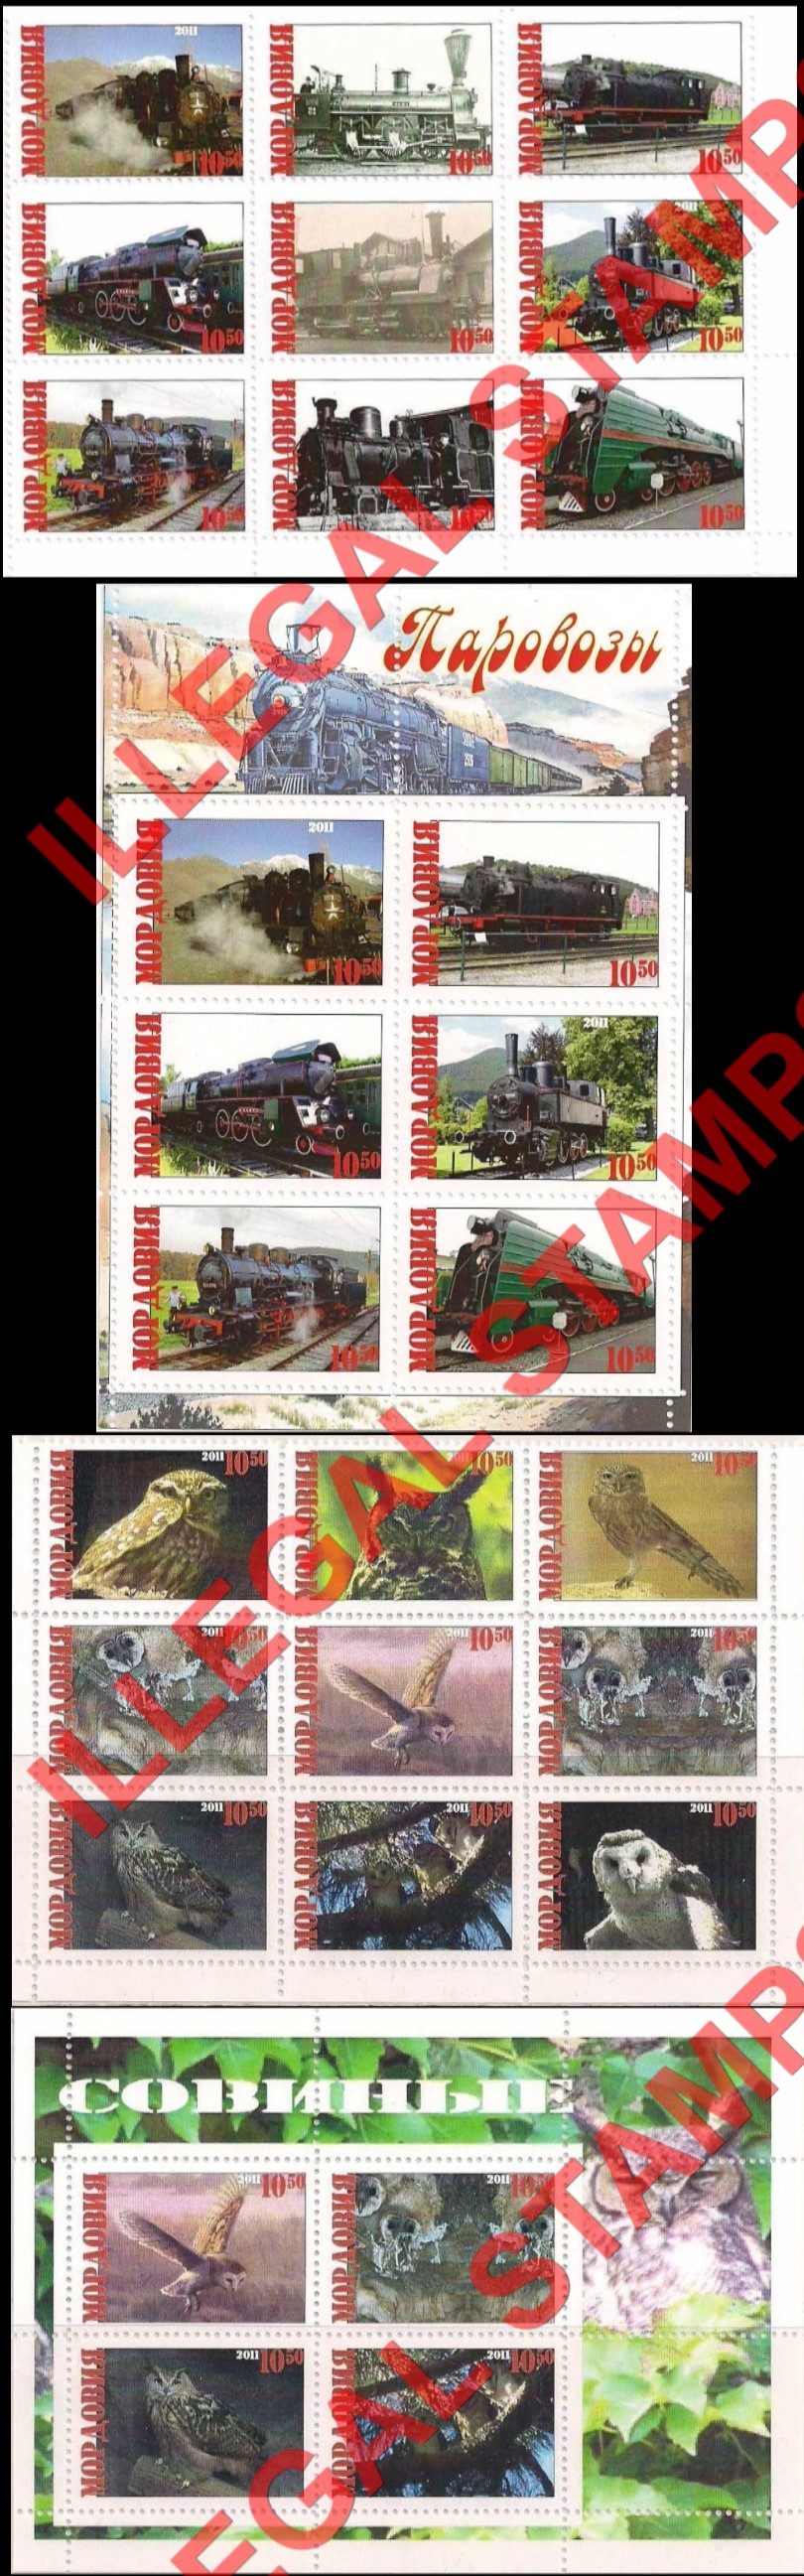 Republic of Mordovia 2011 Counterfeit Illegal Stamps